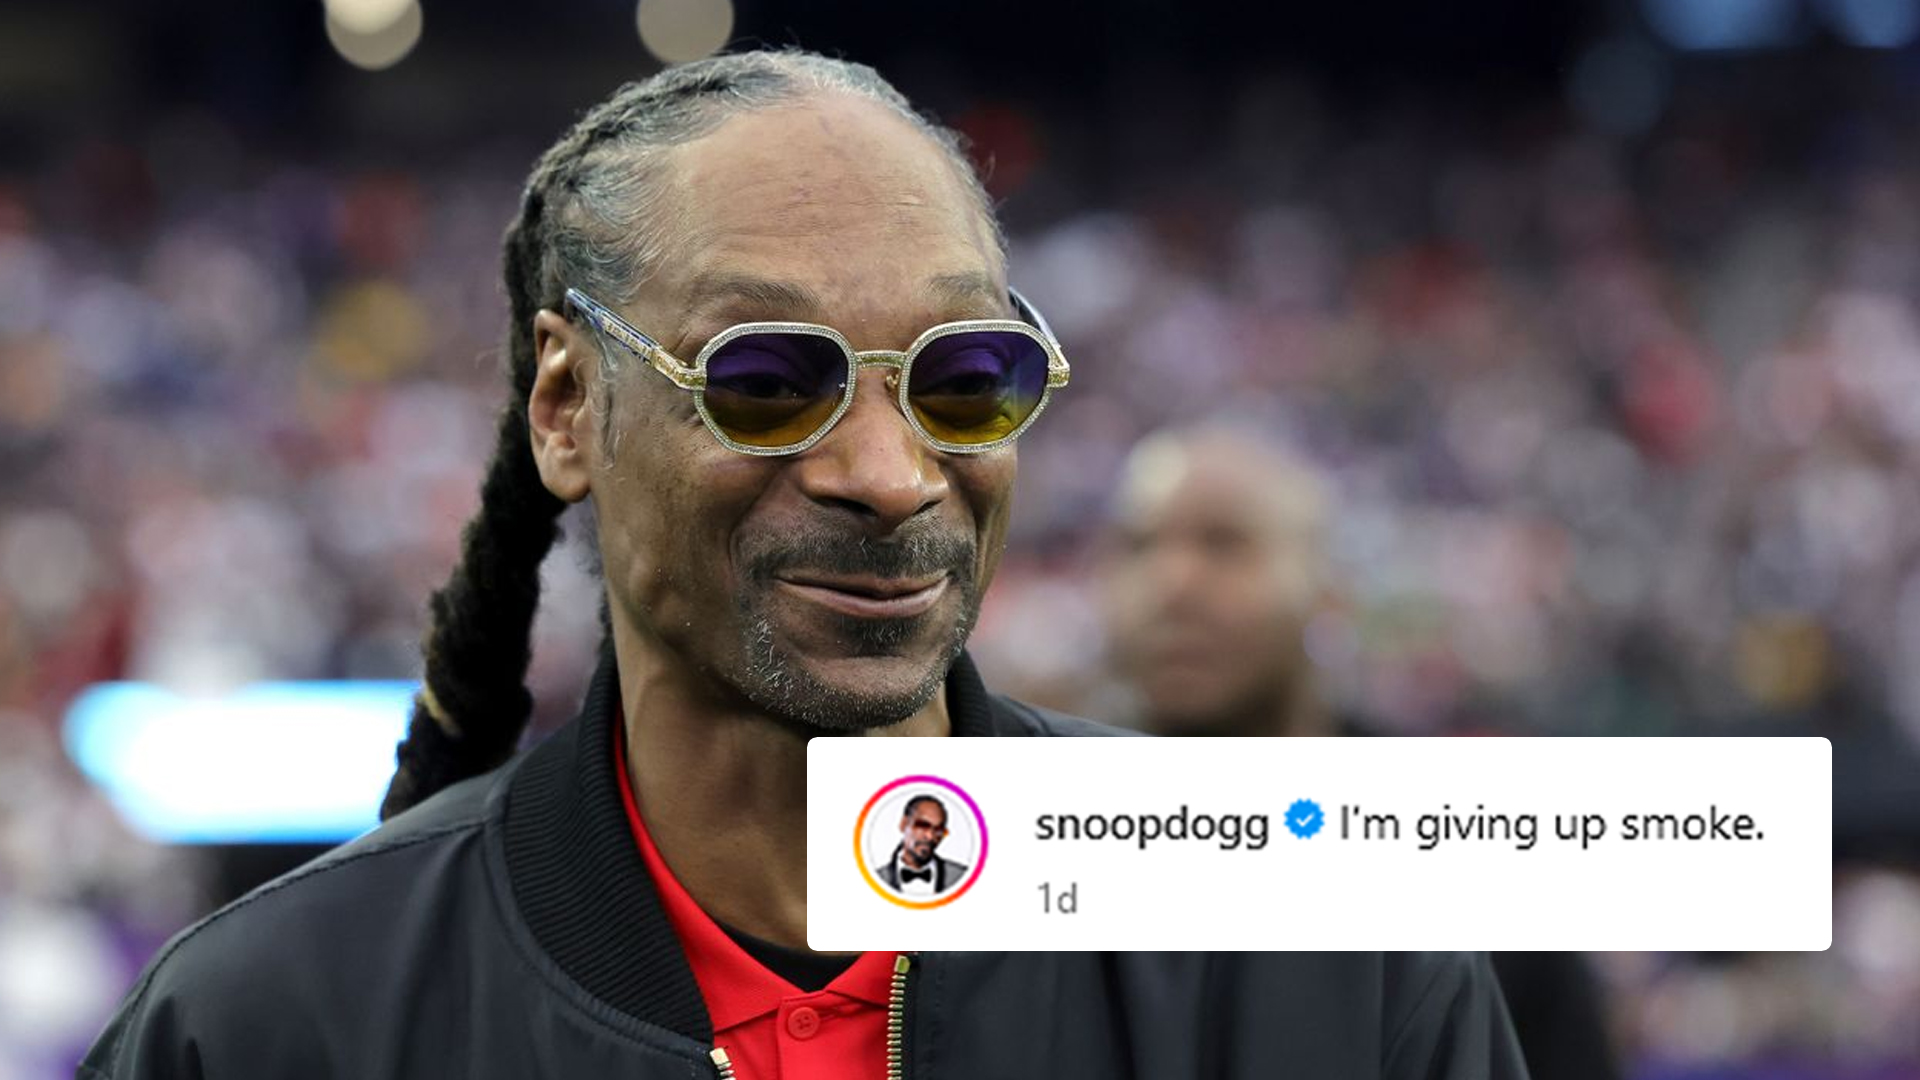 Snoop Dogg To Give Up Smoking!